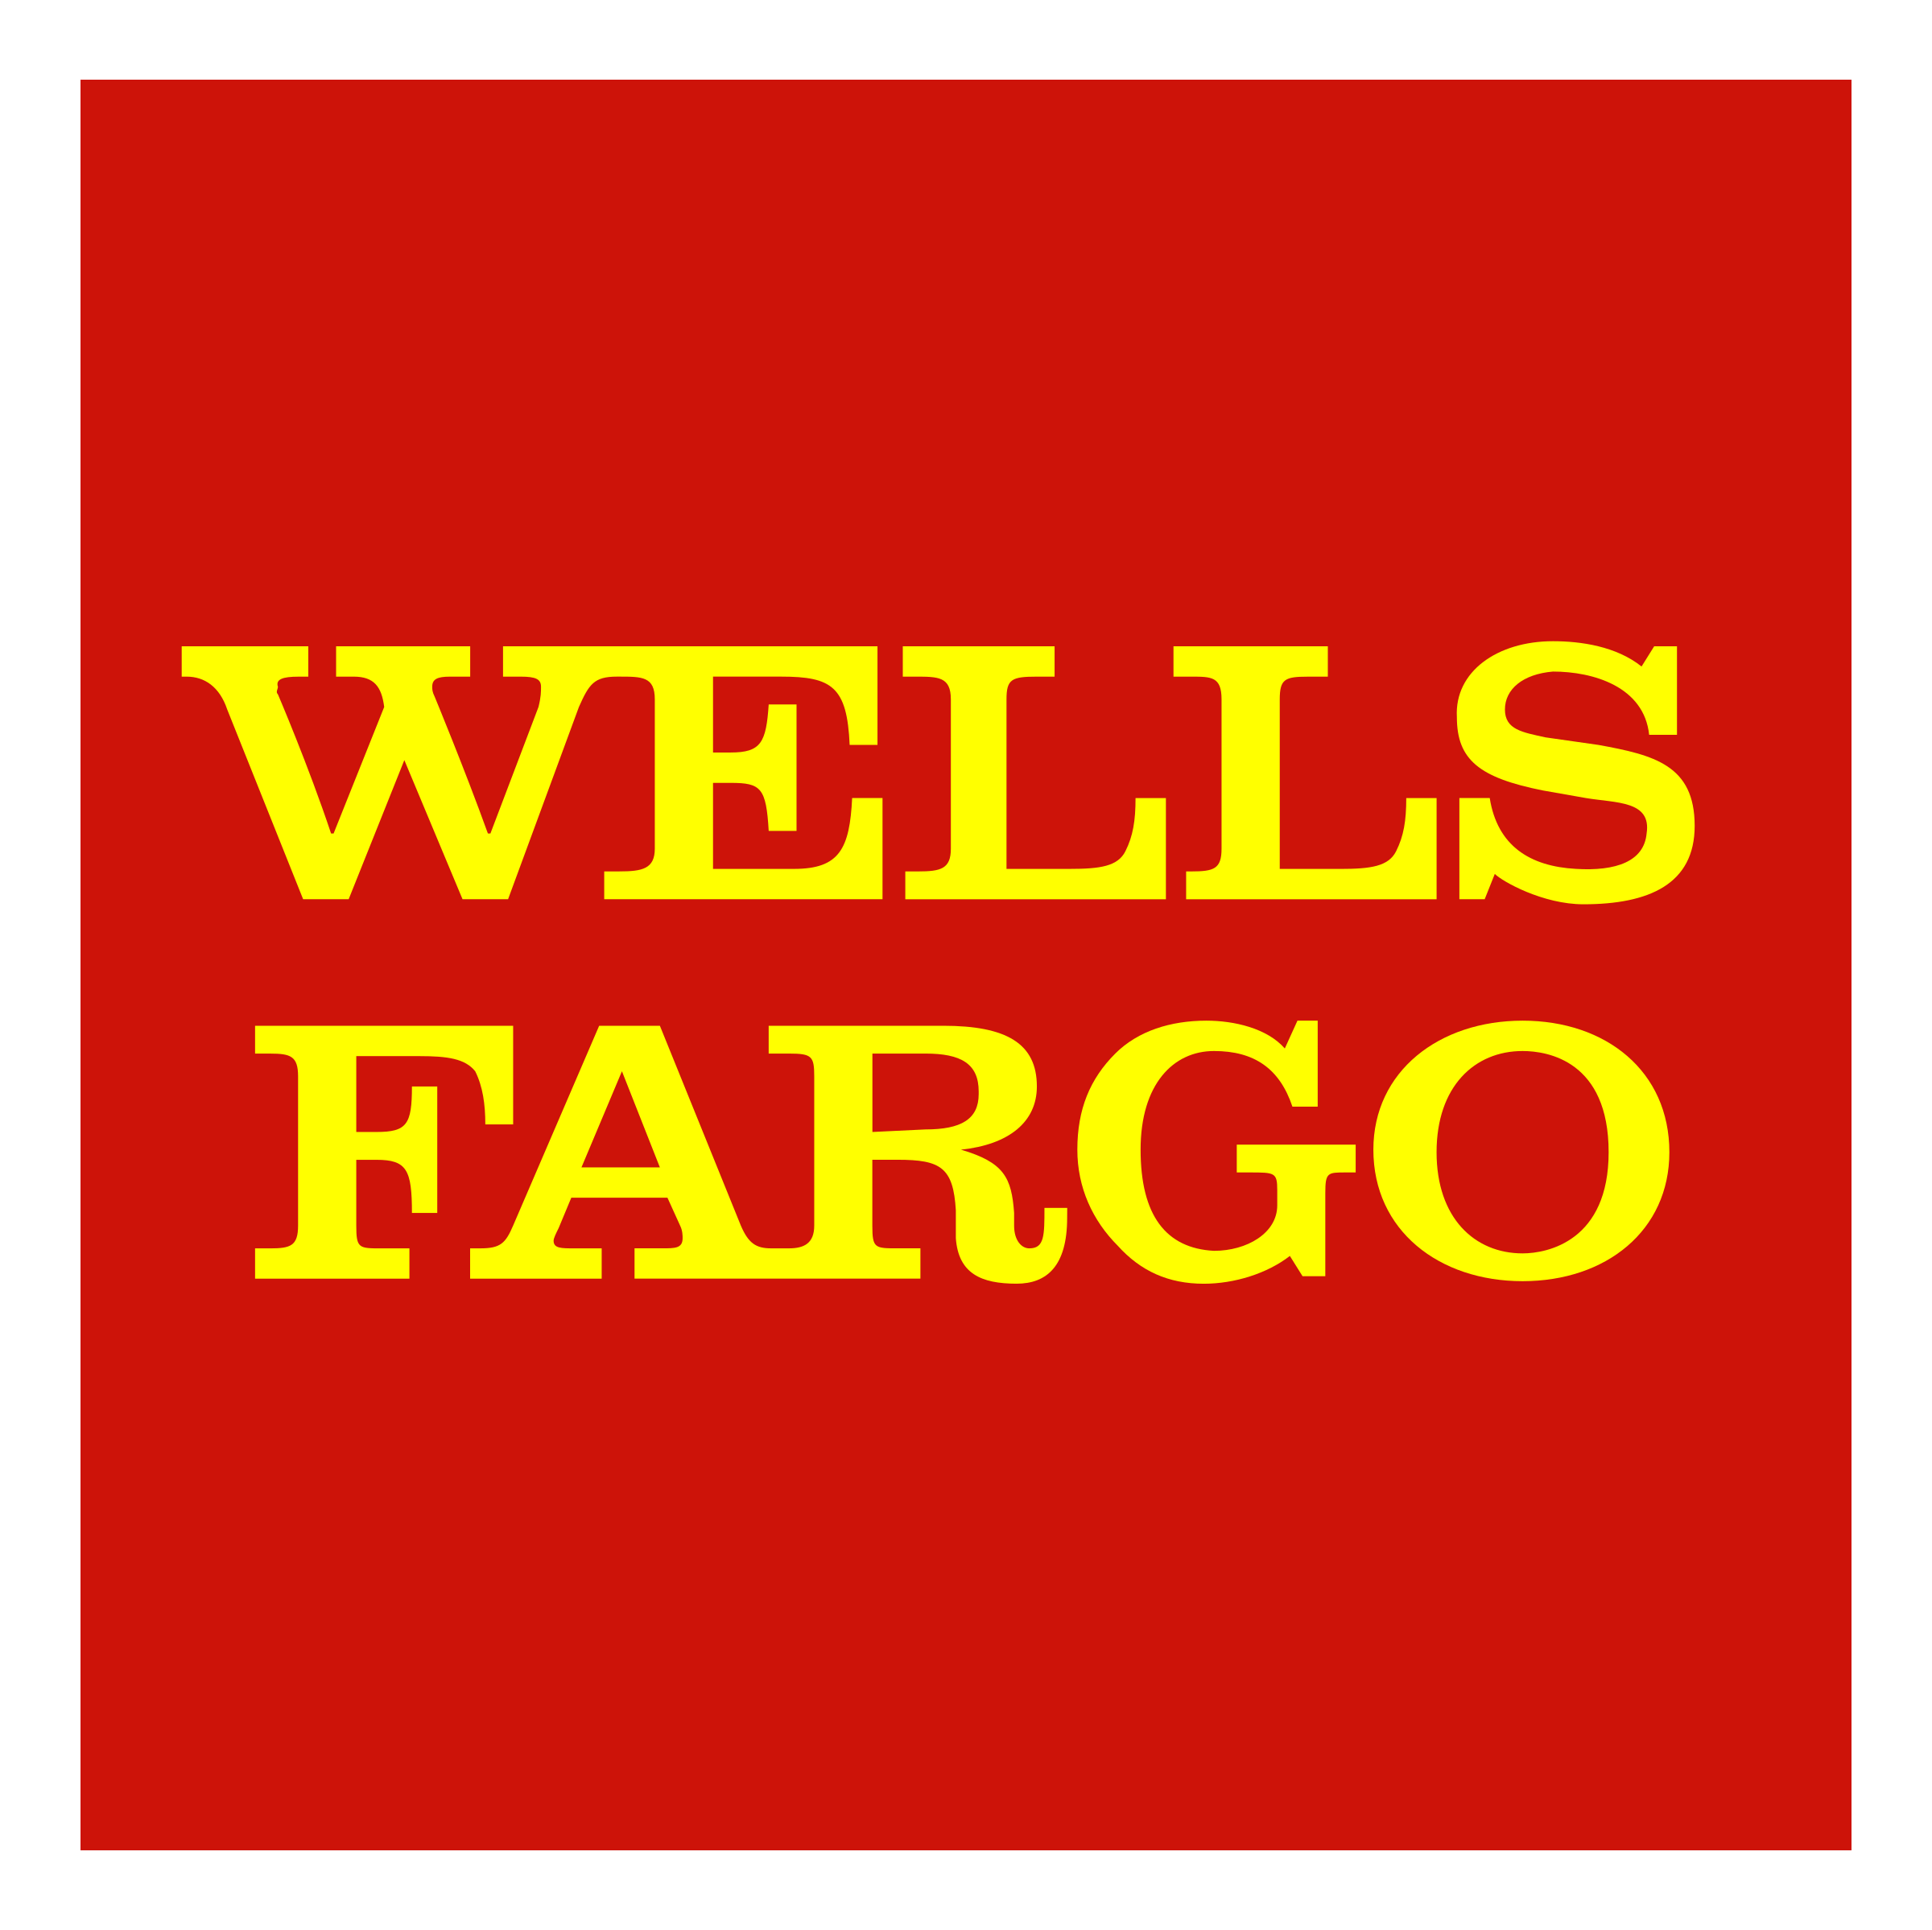 wells-fargo-logo-transparent